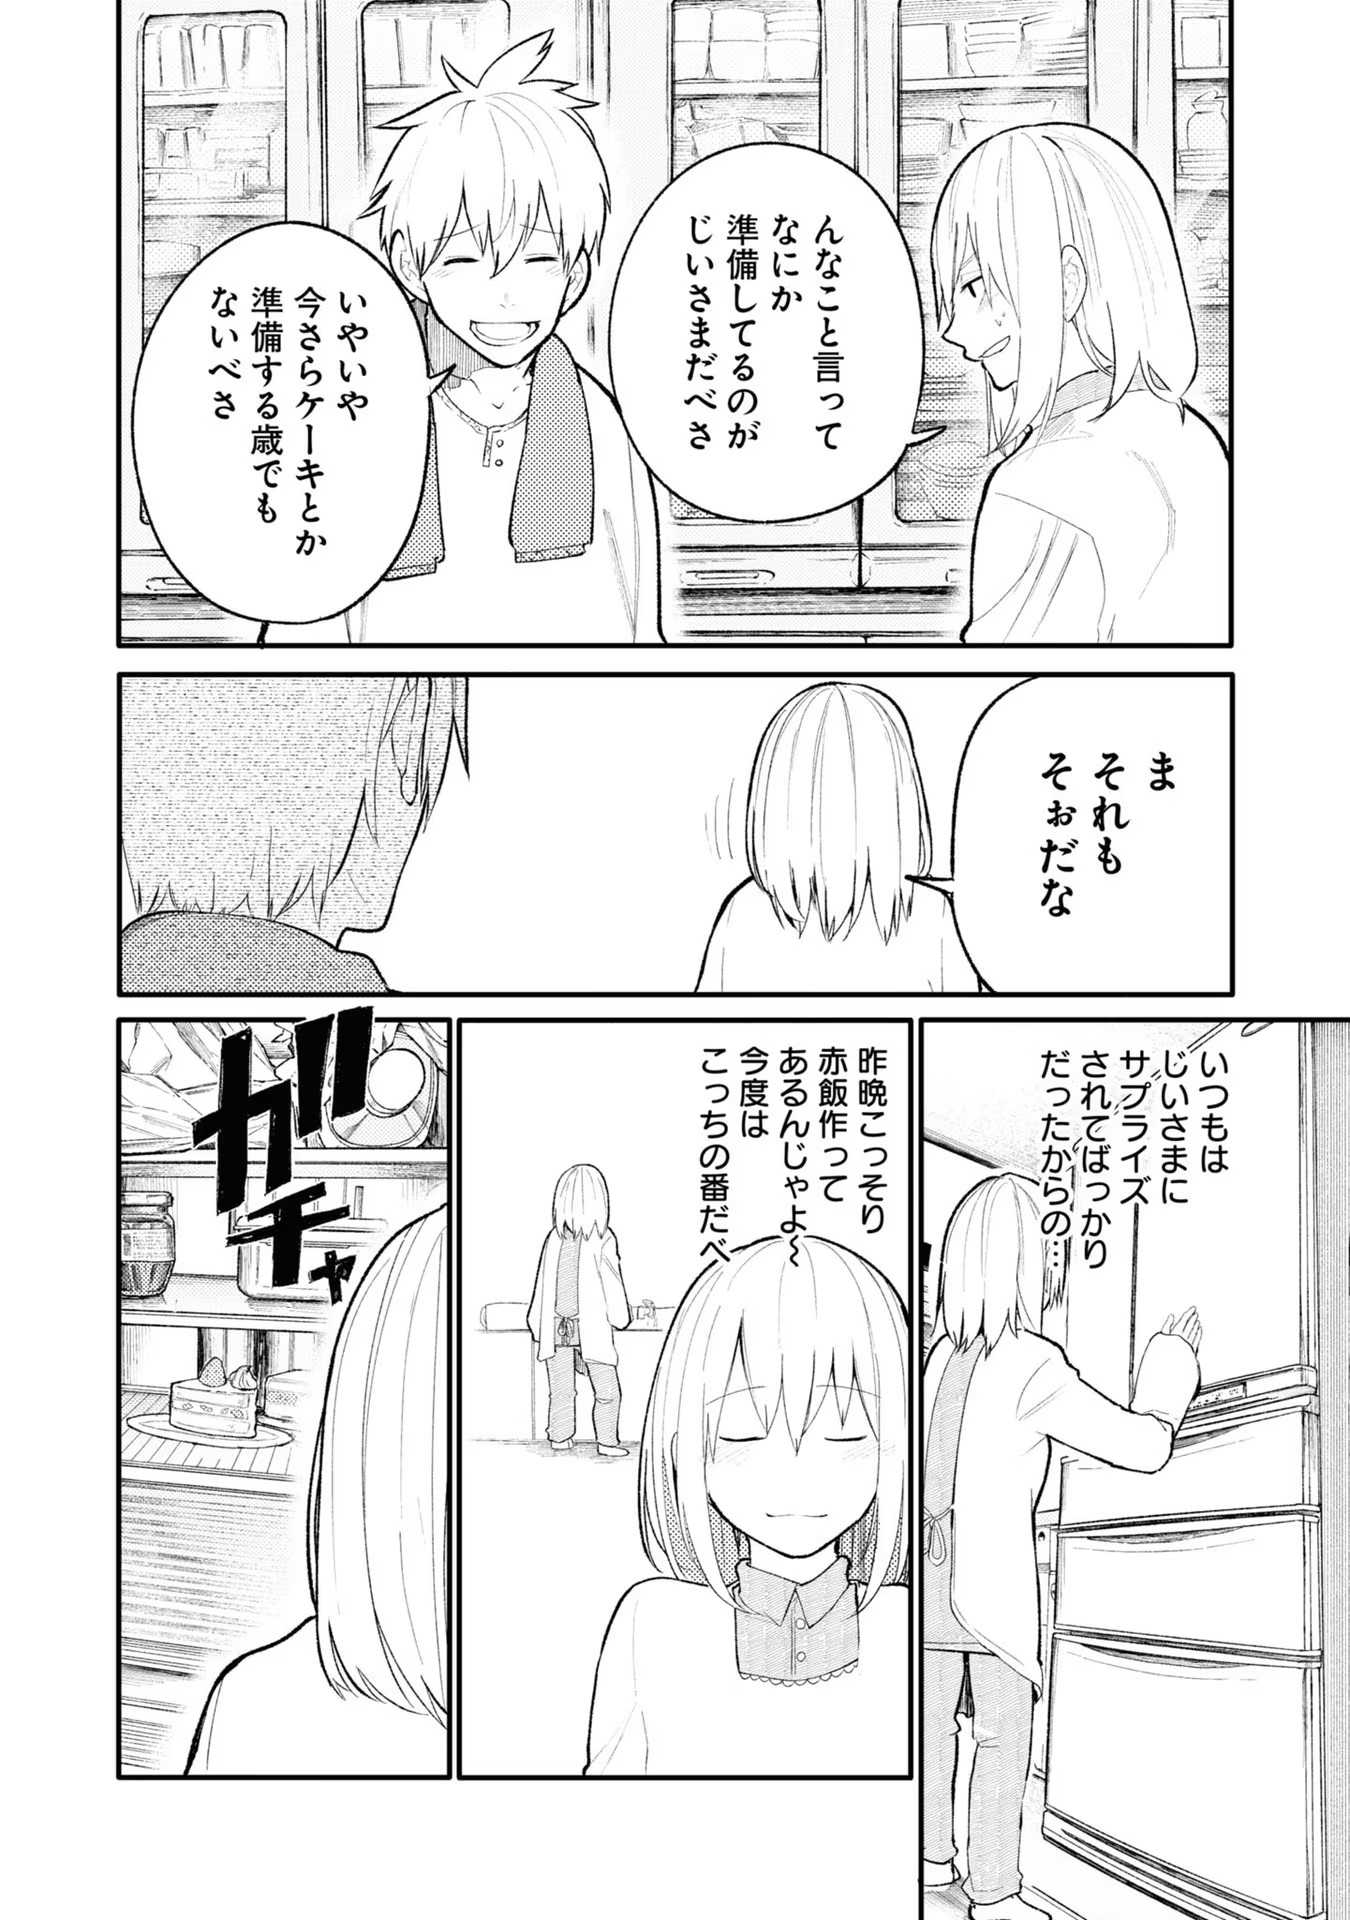 Ojii-san to Obaa-san ga Wakigaetta Hanashi - Chapter 23 - Page 2